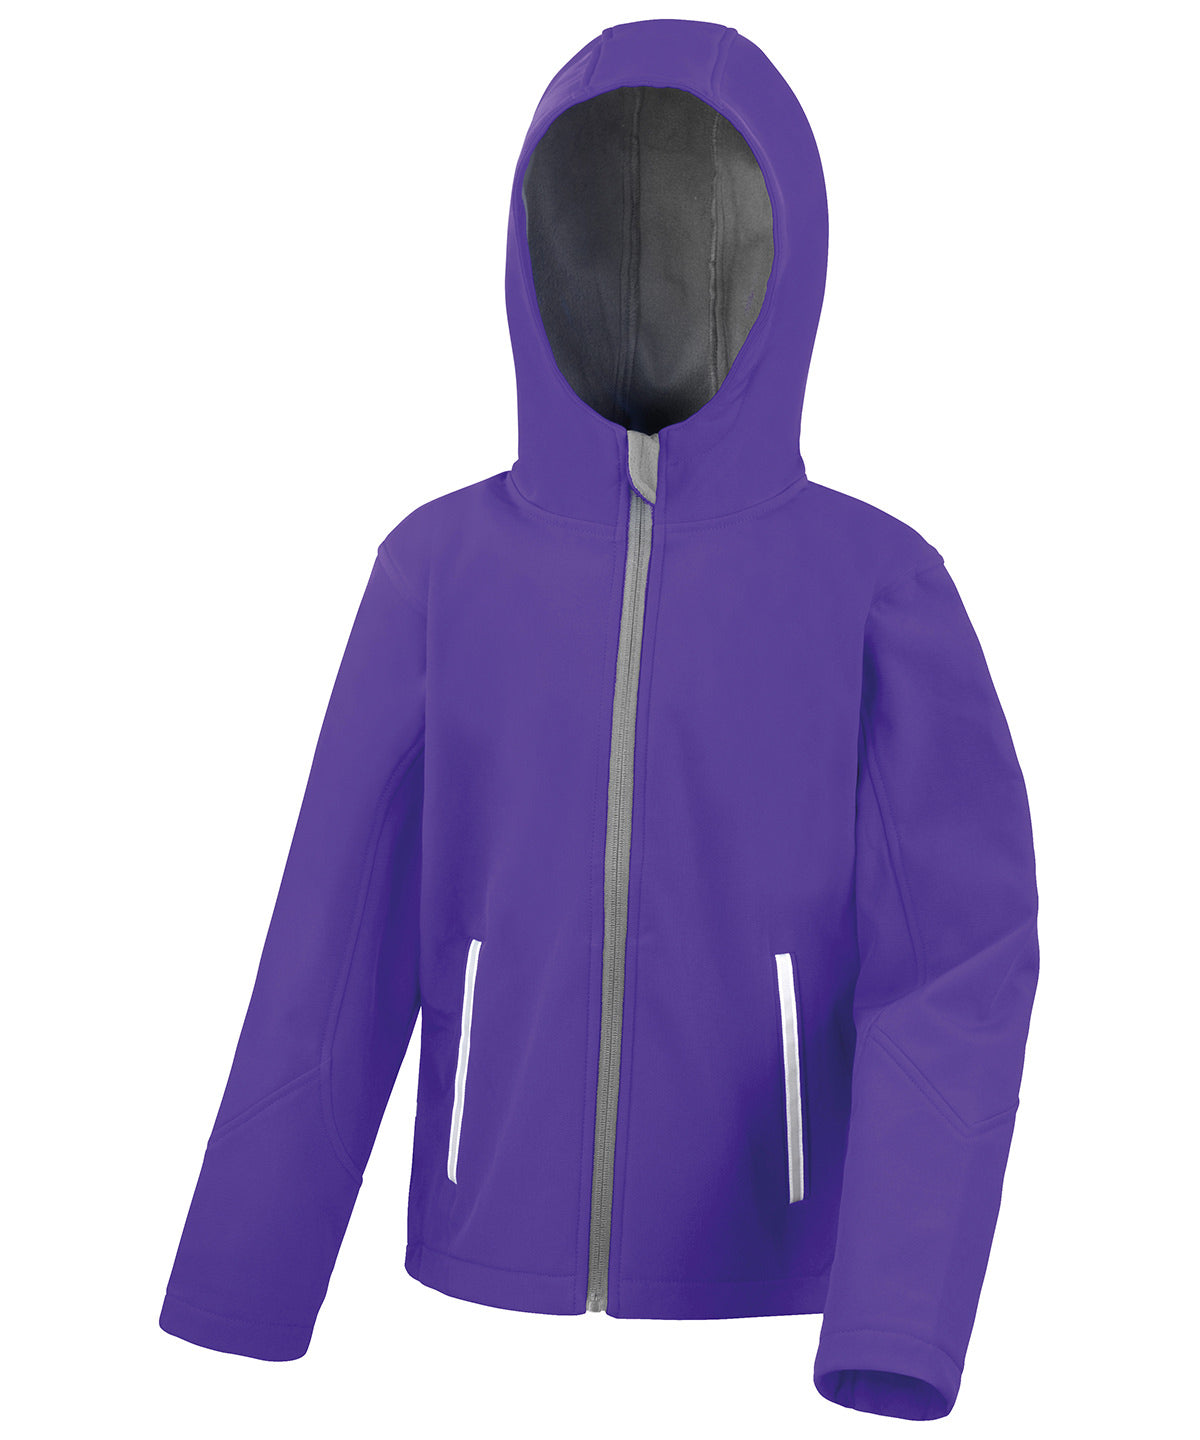 Core junior TX performance hooded softshell jacket